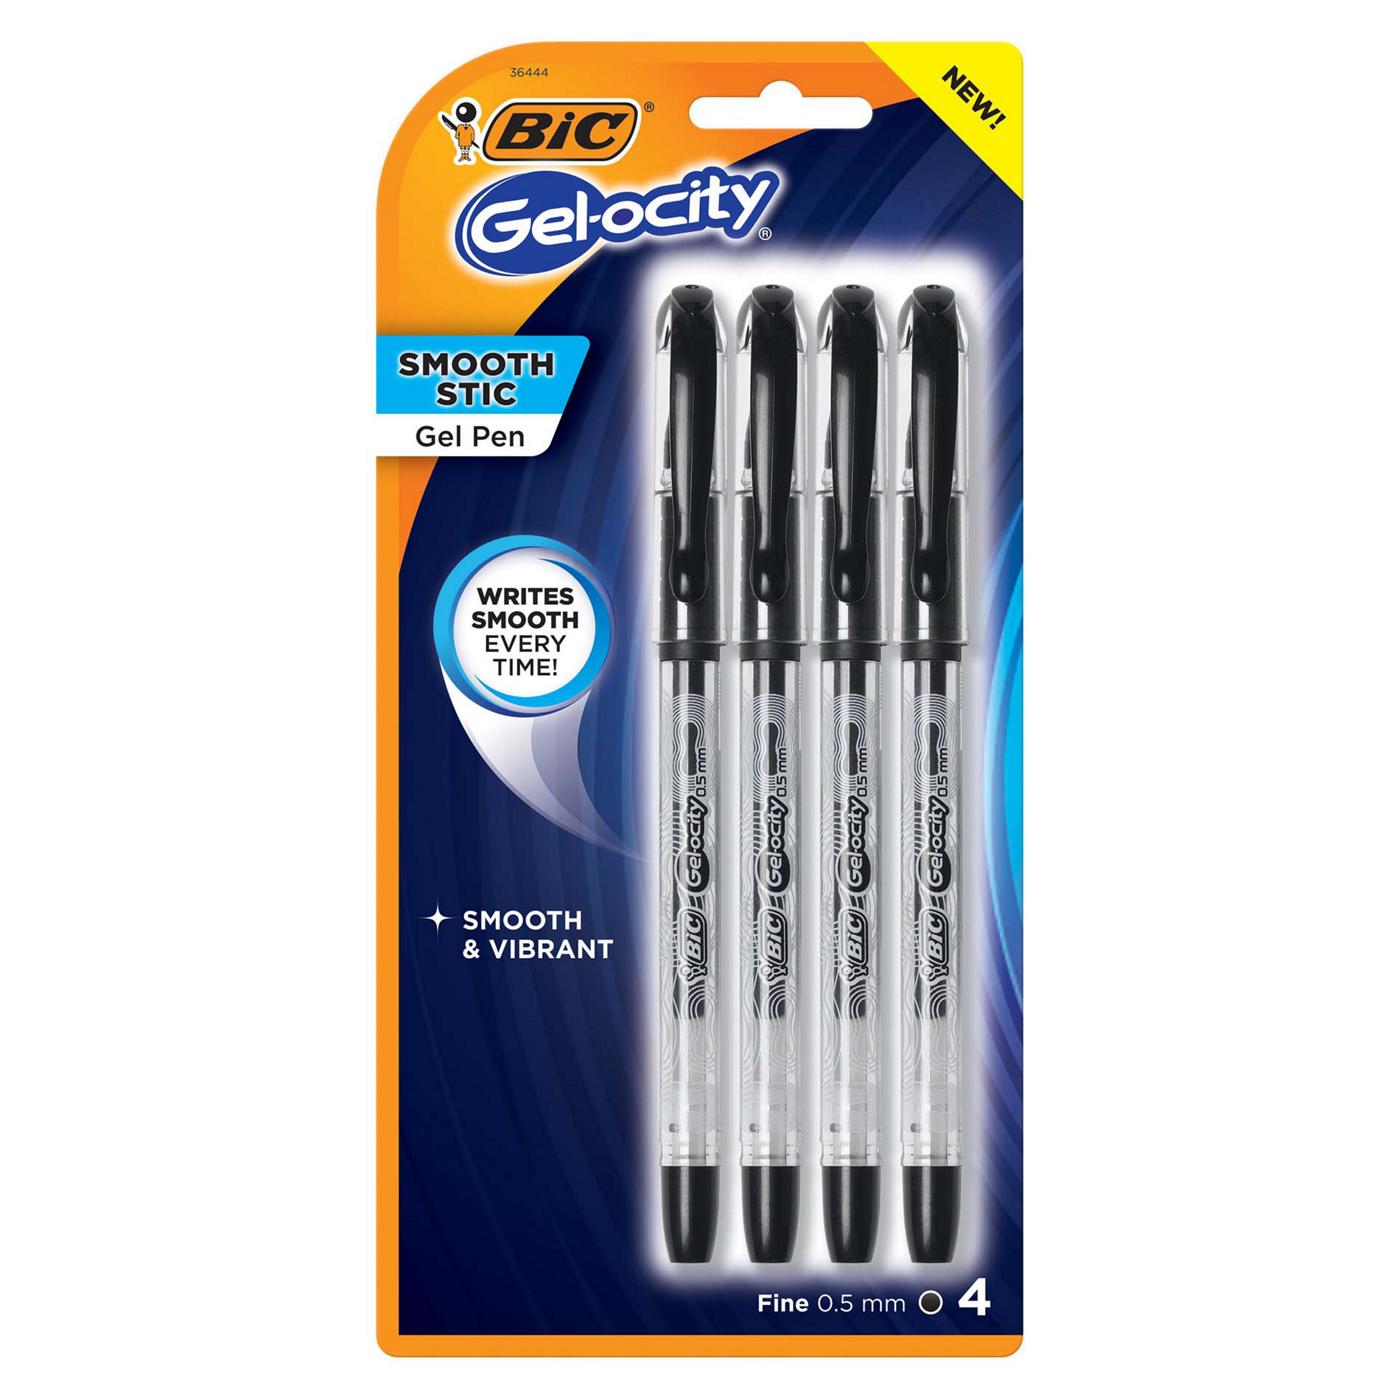 BIC Gel-ocity Smooth Stic 0.5mm Gel Pens - Black Ink; image 1 of 2